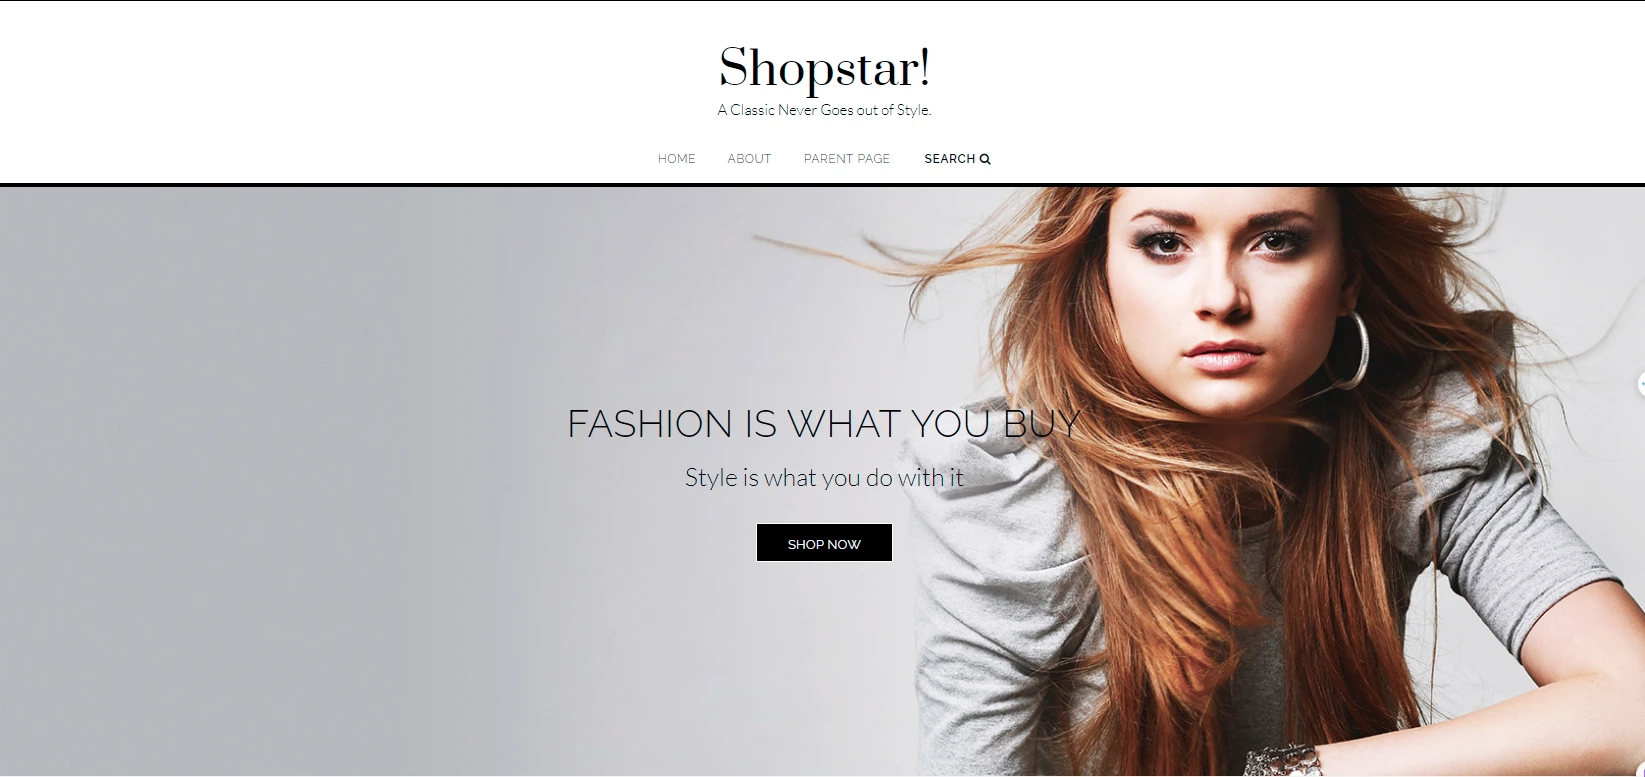 Shopstar theme - wordpress woocommerce themes free for fashion topic